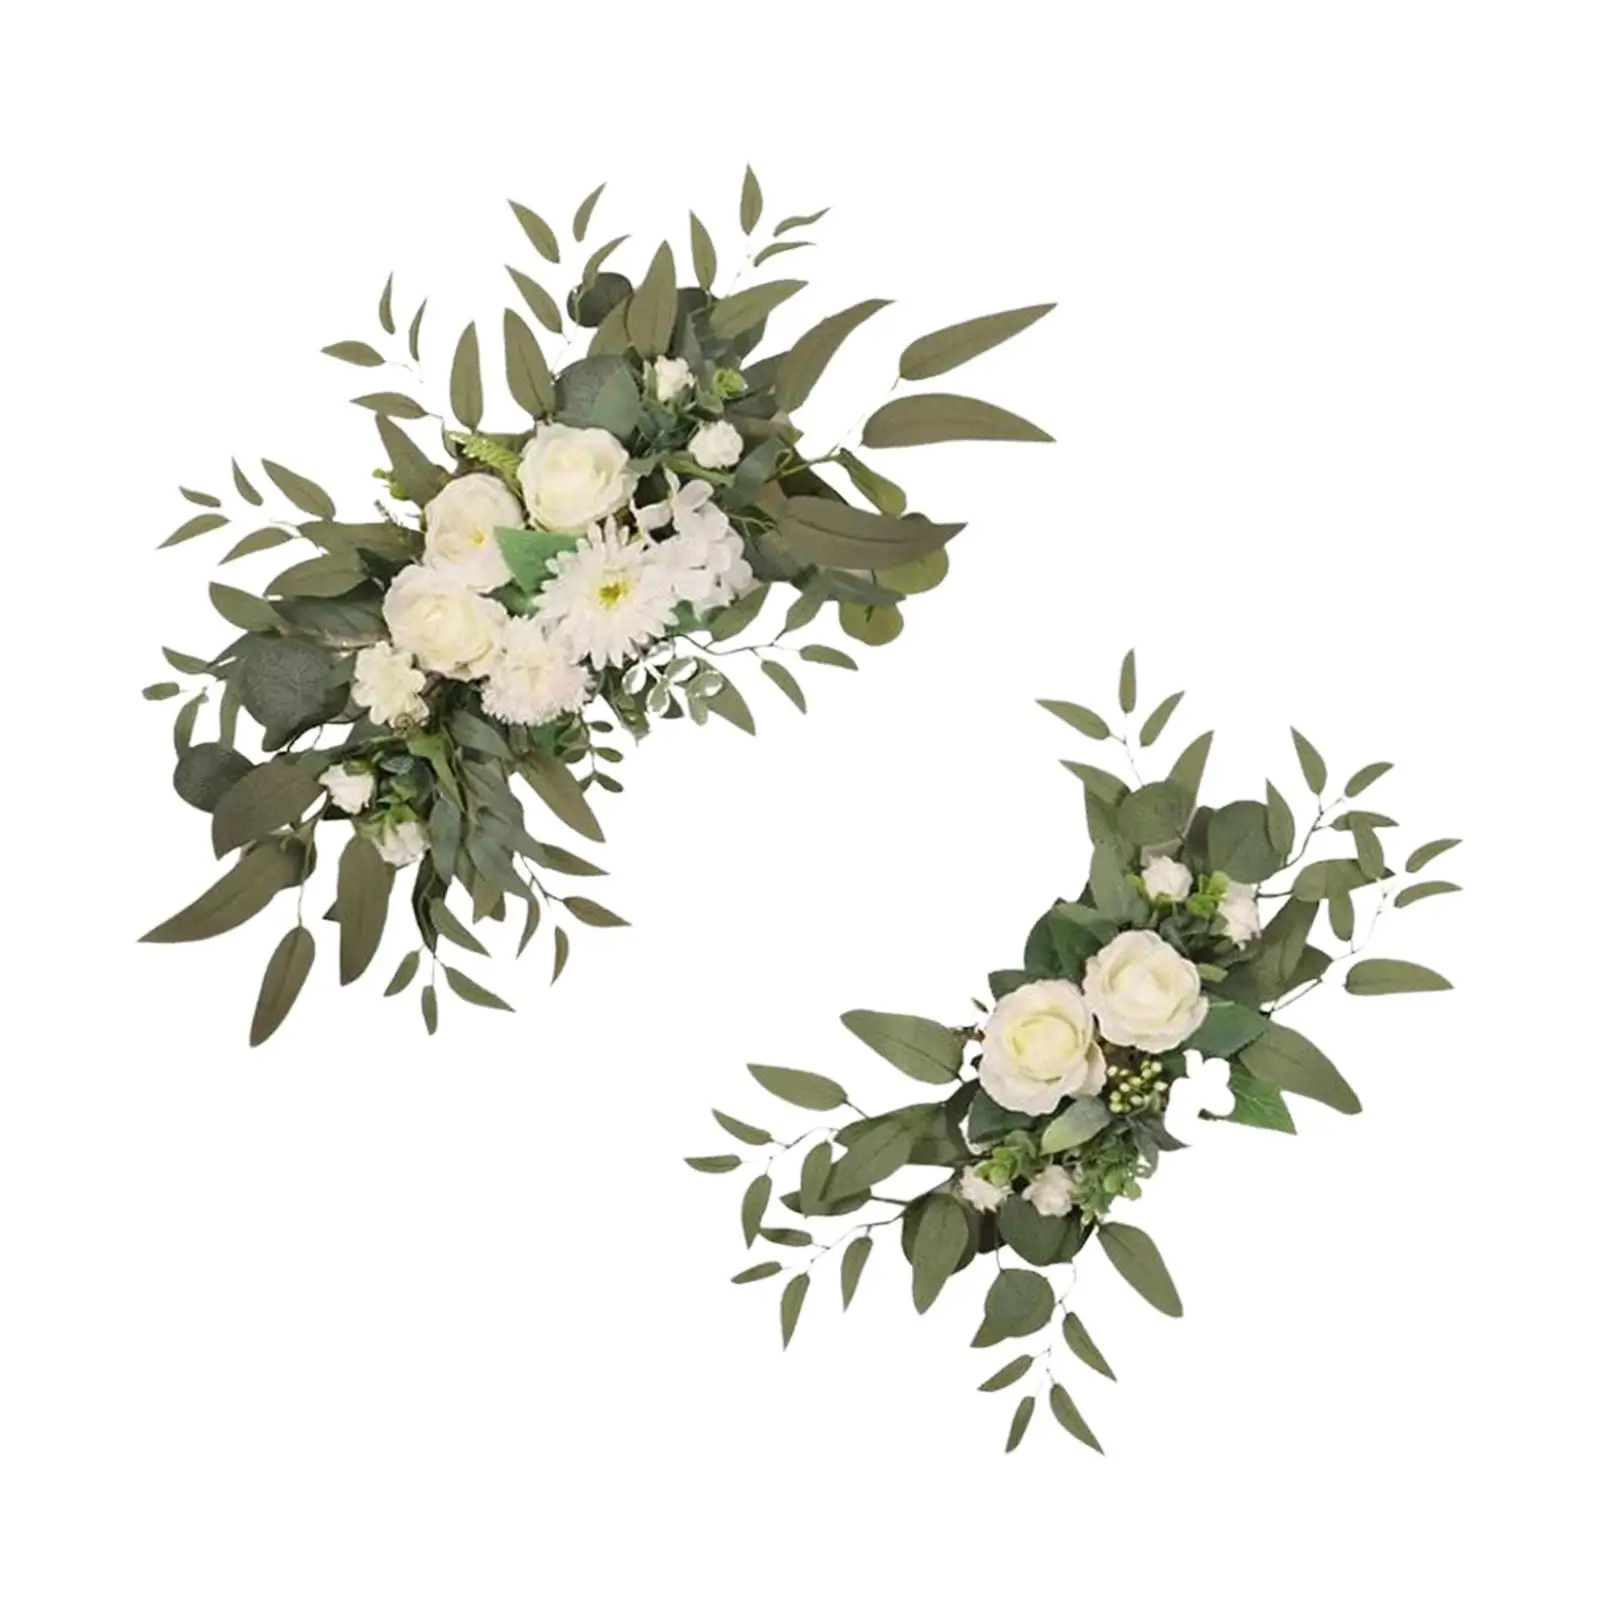 2x Wedding Arch Flowers Arrangements Handmade Weddings Floral Wreath